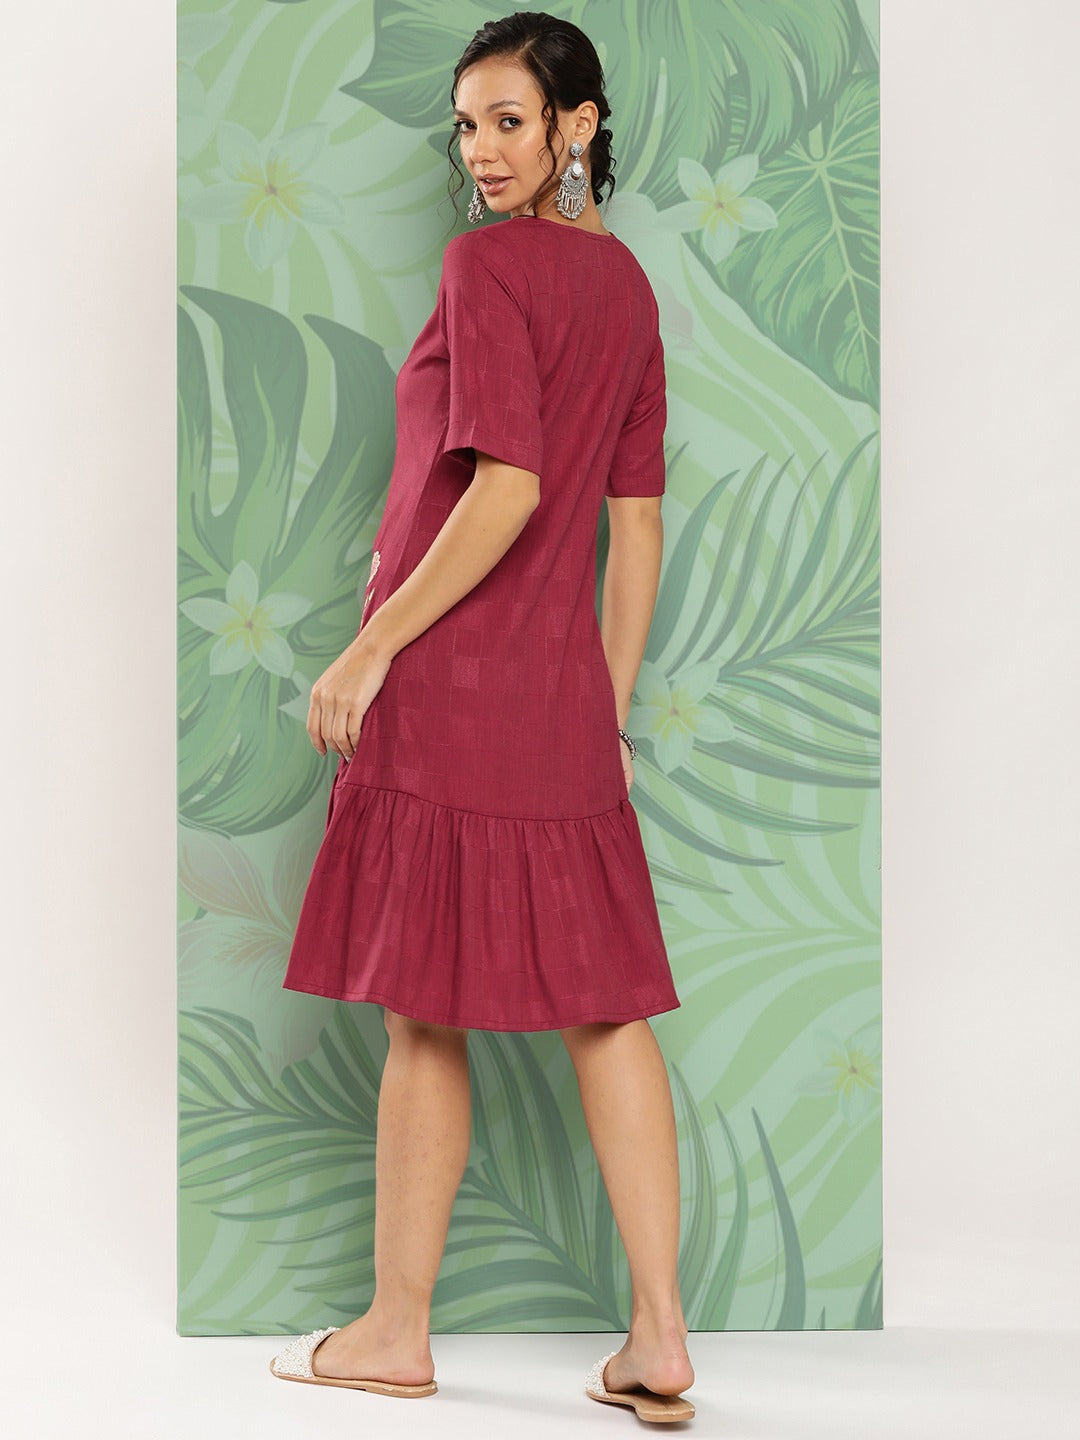 Maroon Floral Ethnic Dress-Yufta Store-9852DRSMRS